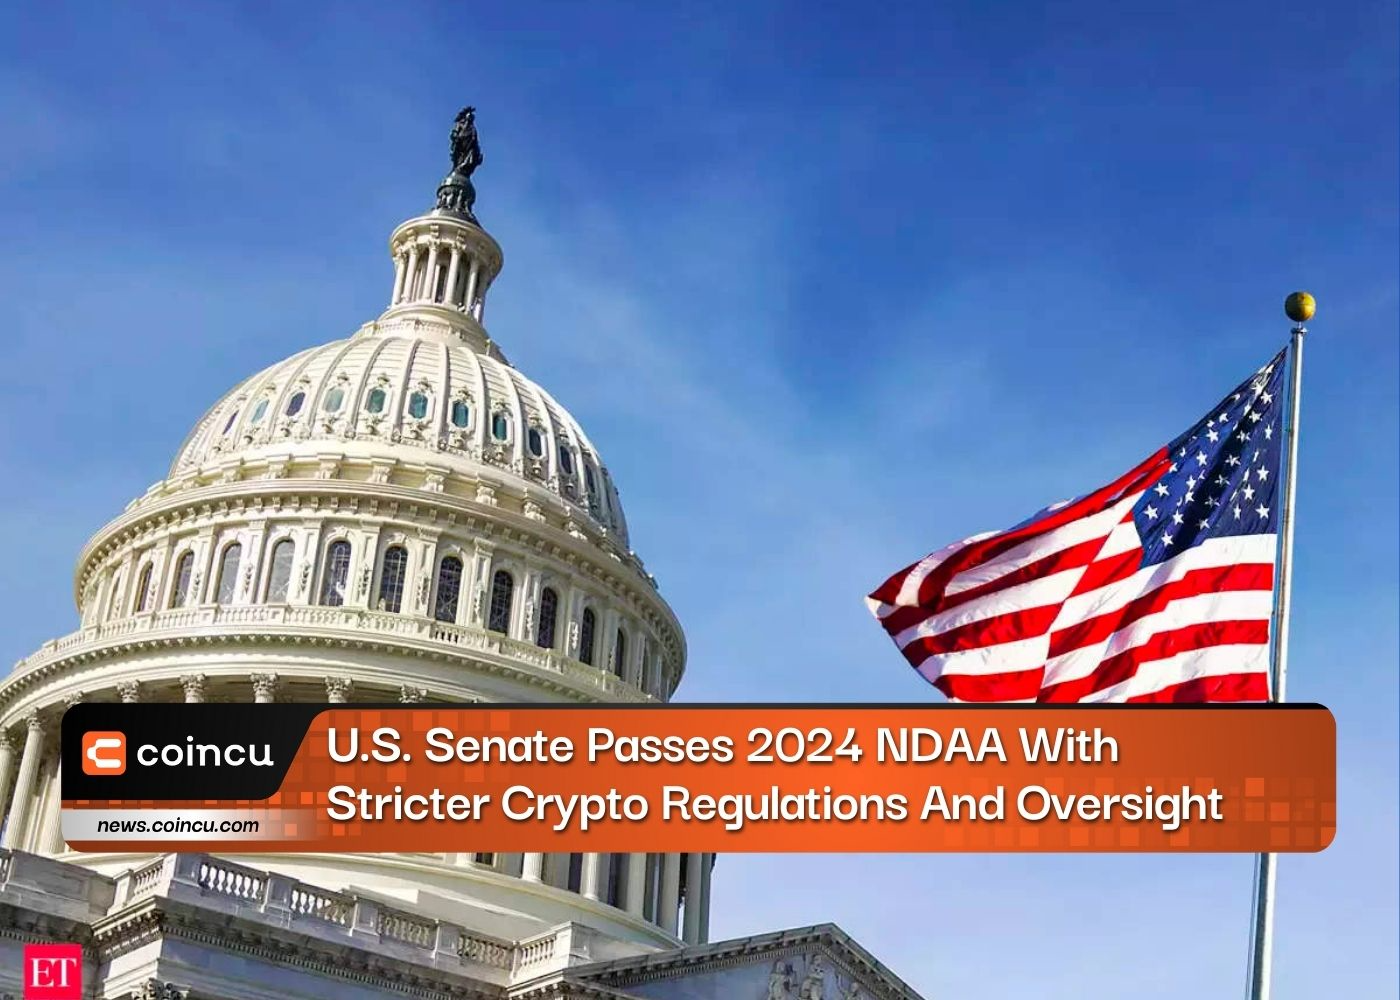 U.S. Senate Passes 2024 NDAA With Stricter Crypto Regulations And Oversight